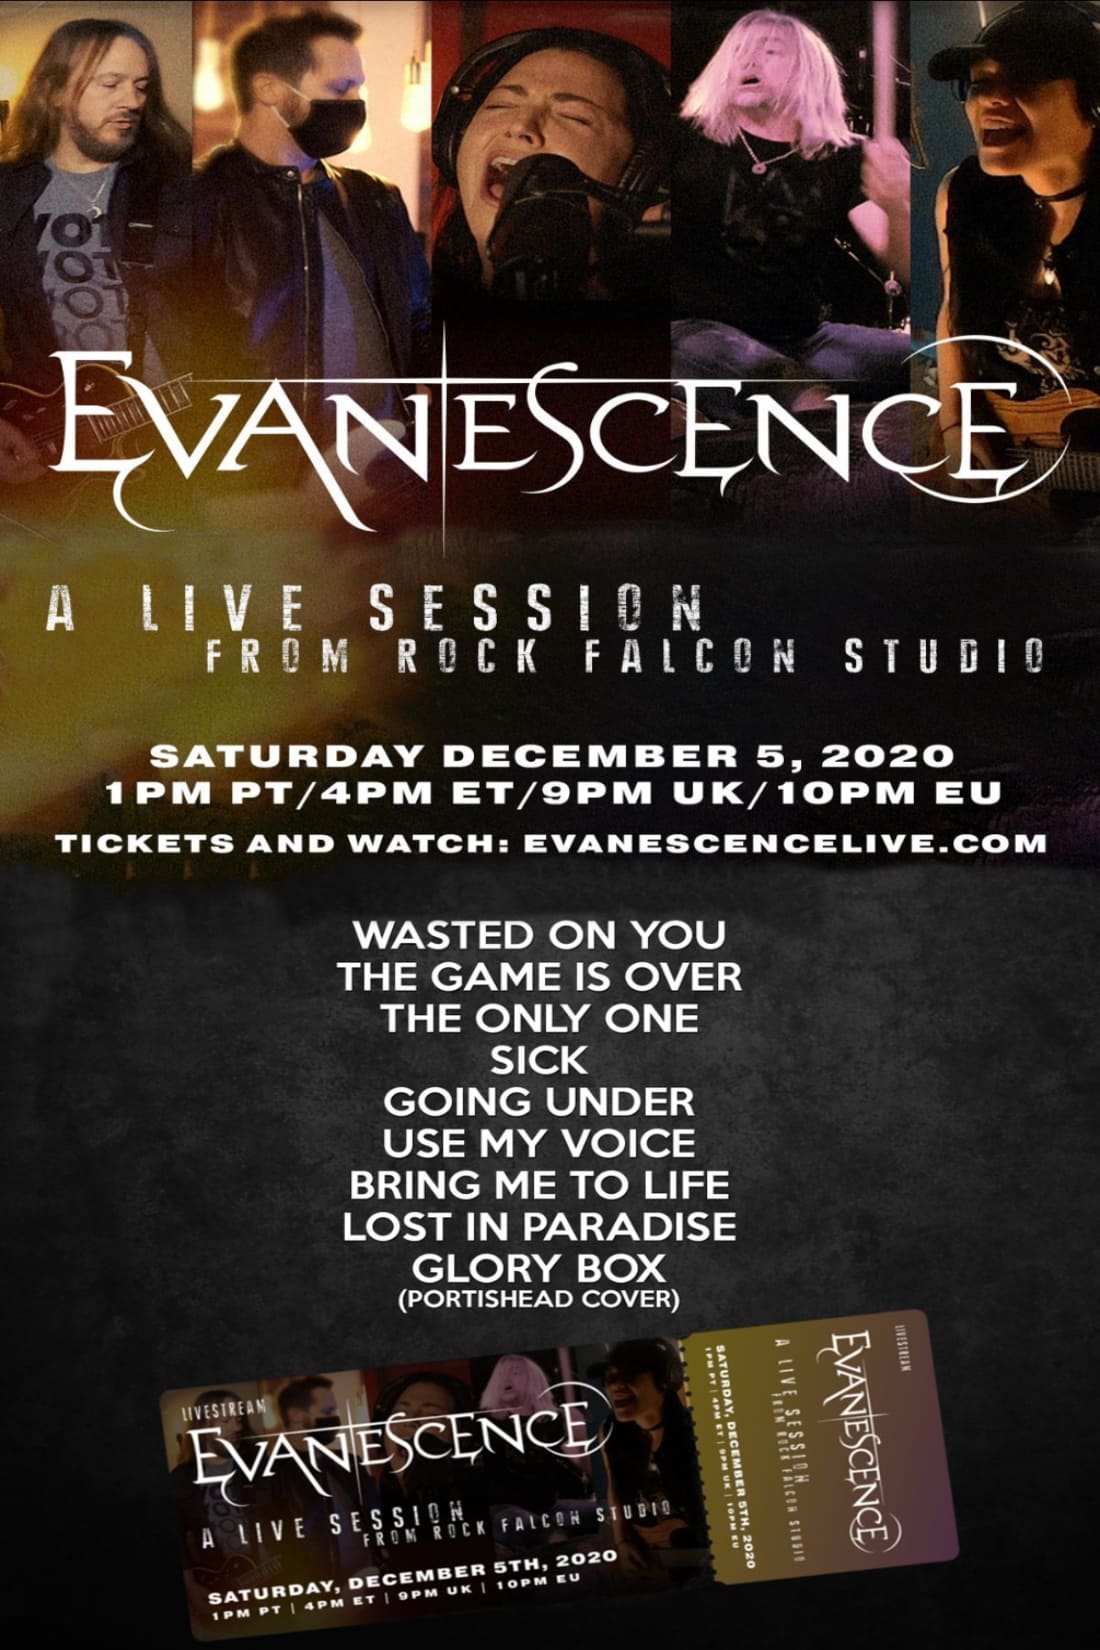 Evanescence - A Live Session From Rock Falcon Studio